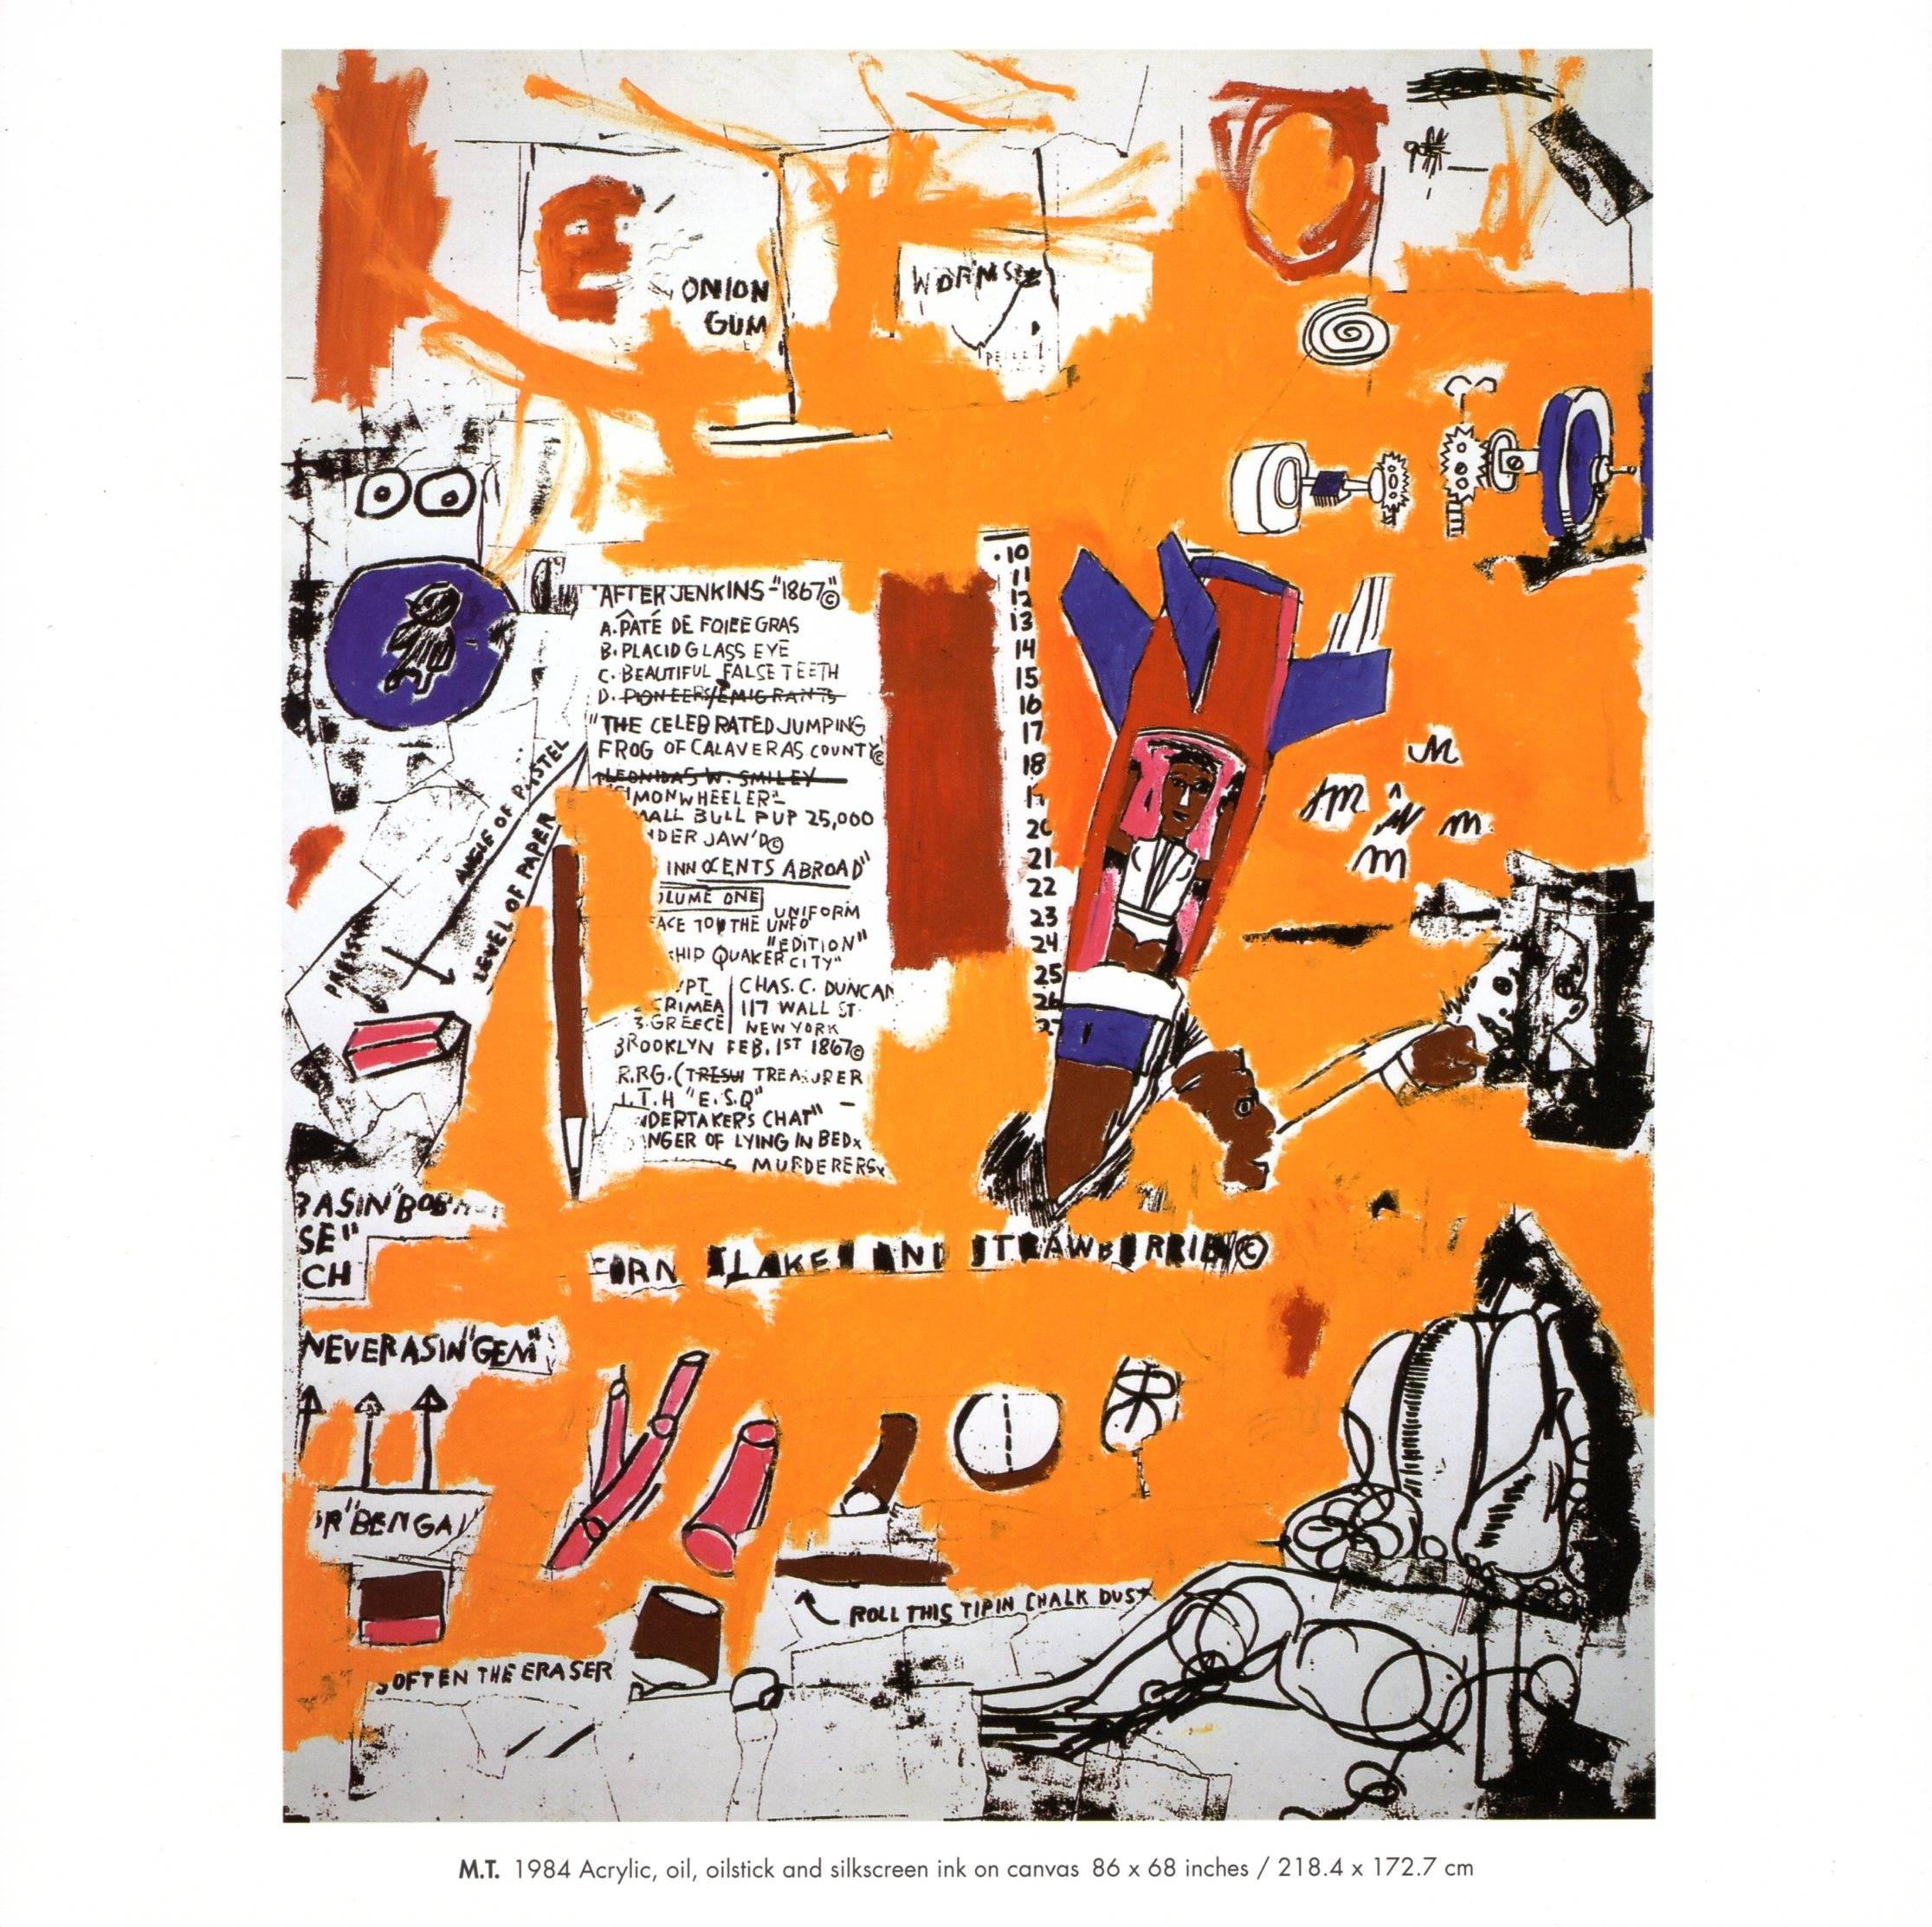 Basquiat announcement card/poster (Tony Shafrazi Gallery) 4